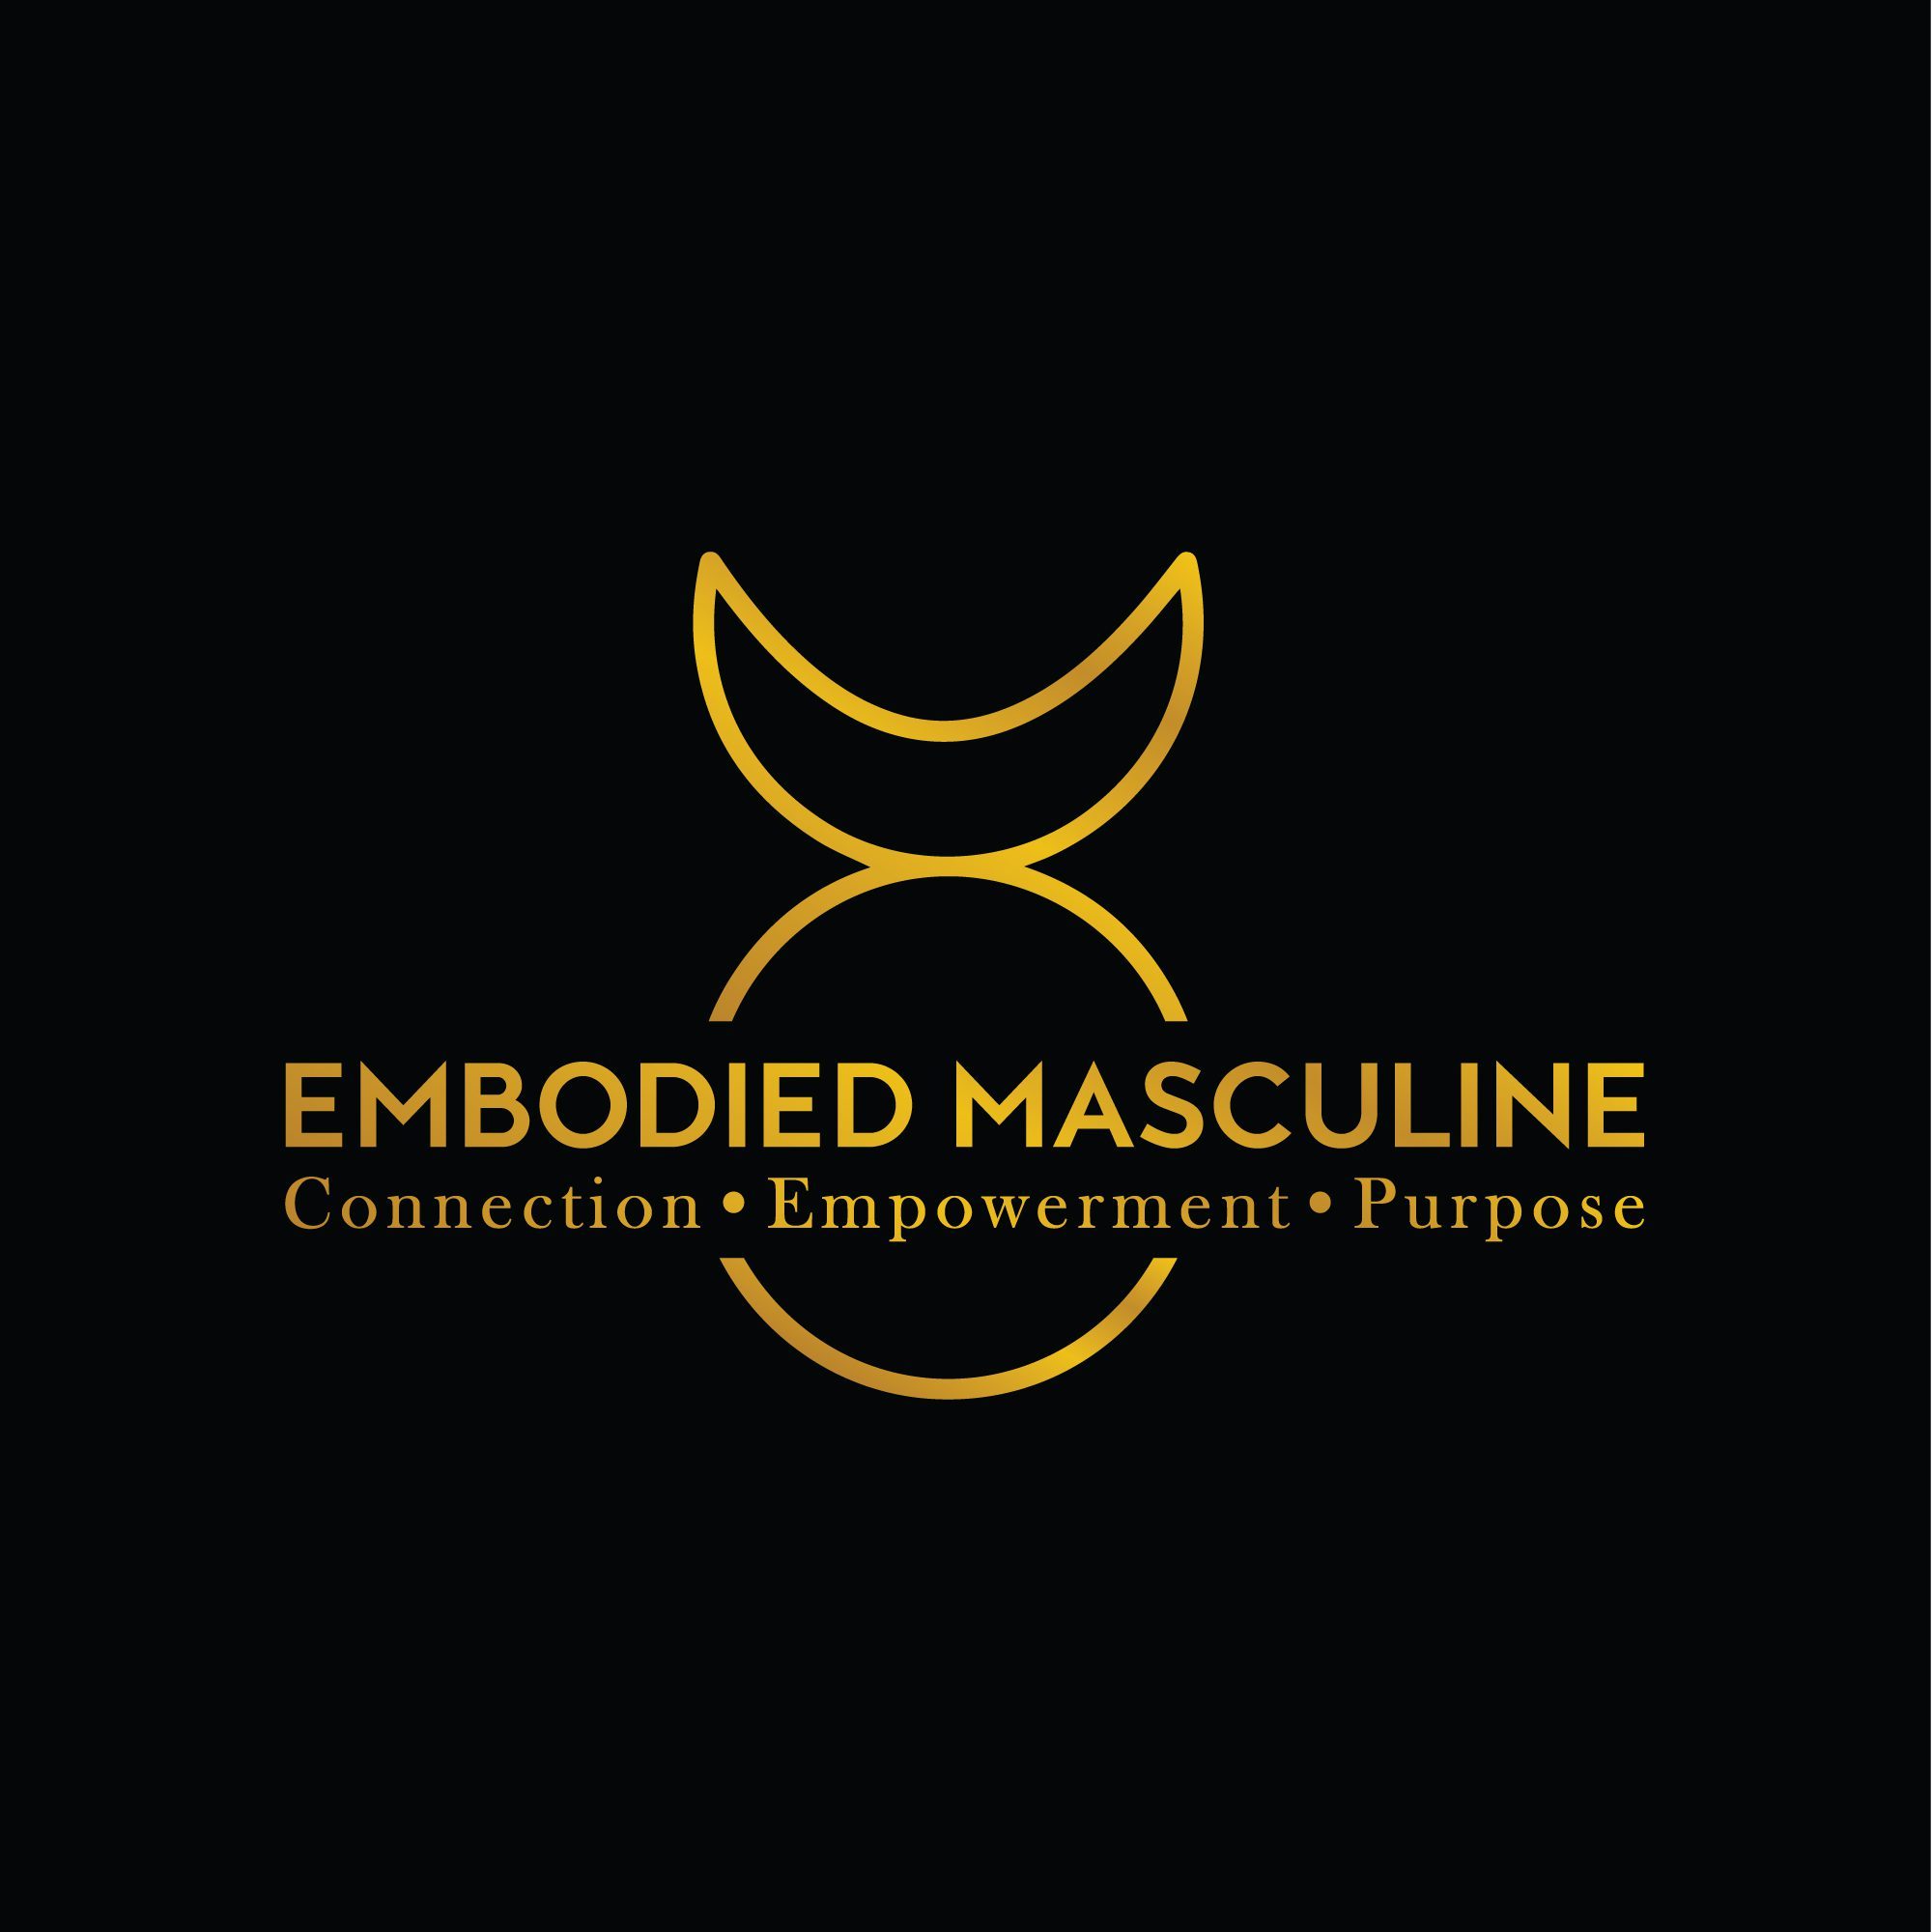 Embodied Masculine logo black